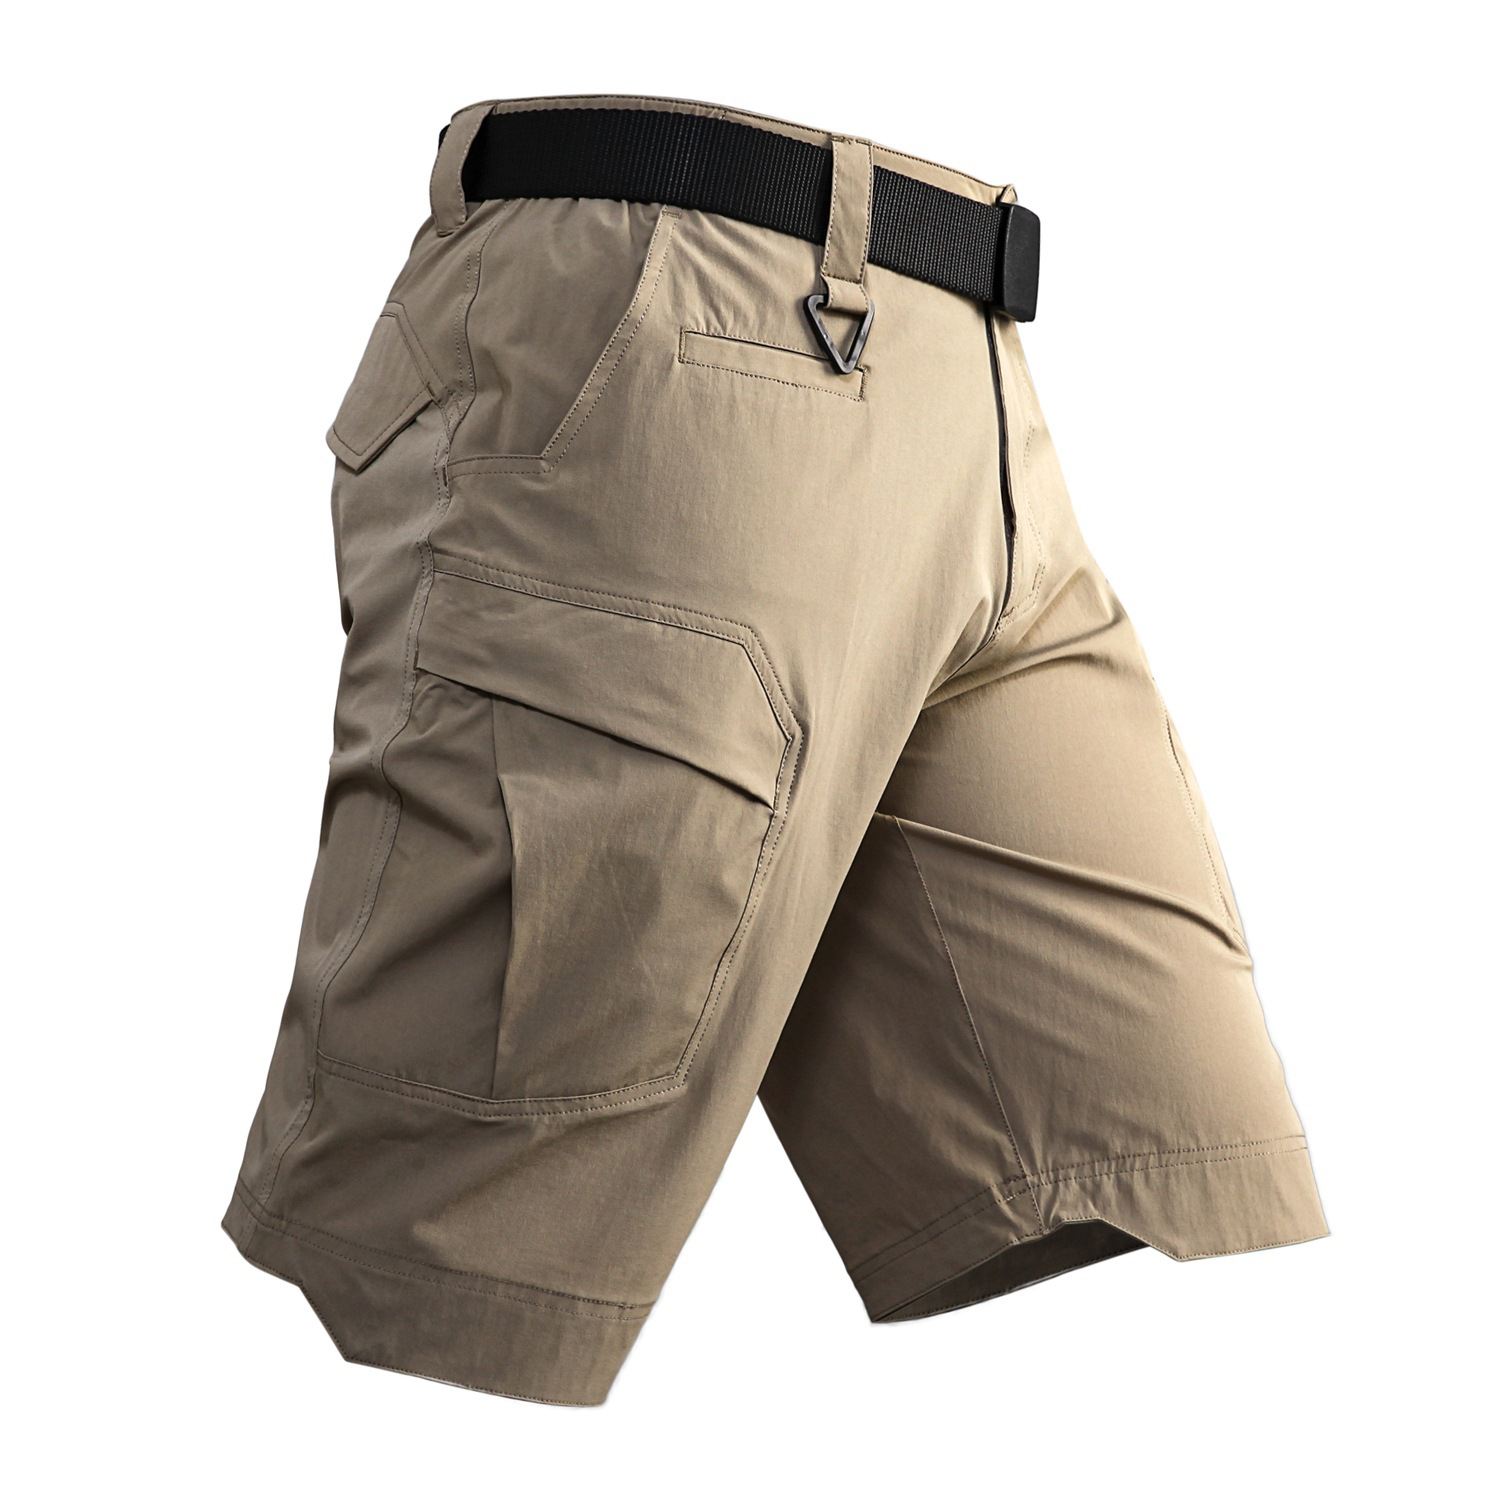 Tactical Shorts Tooling Multi-pocket Chic Shorts